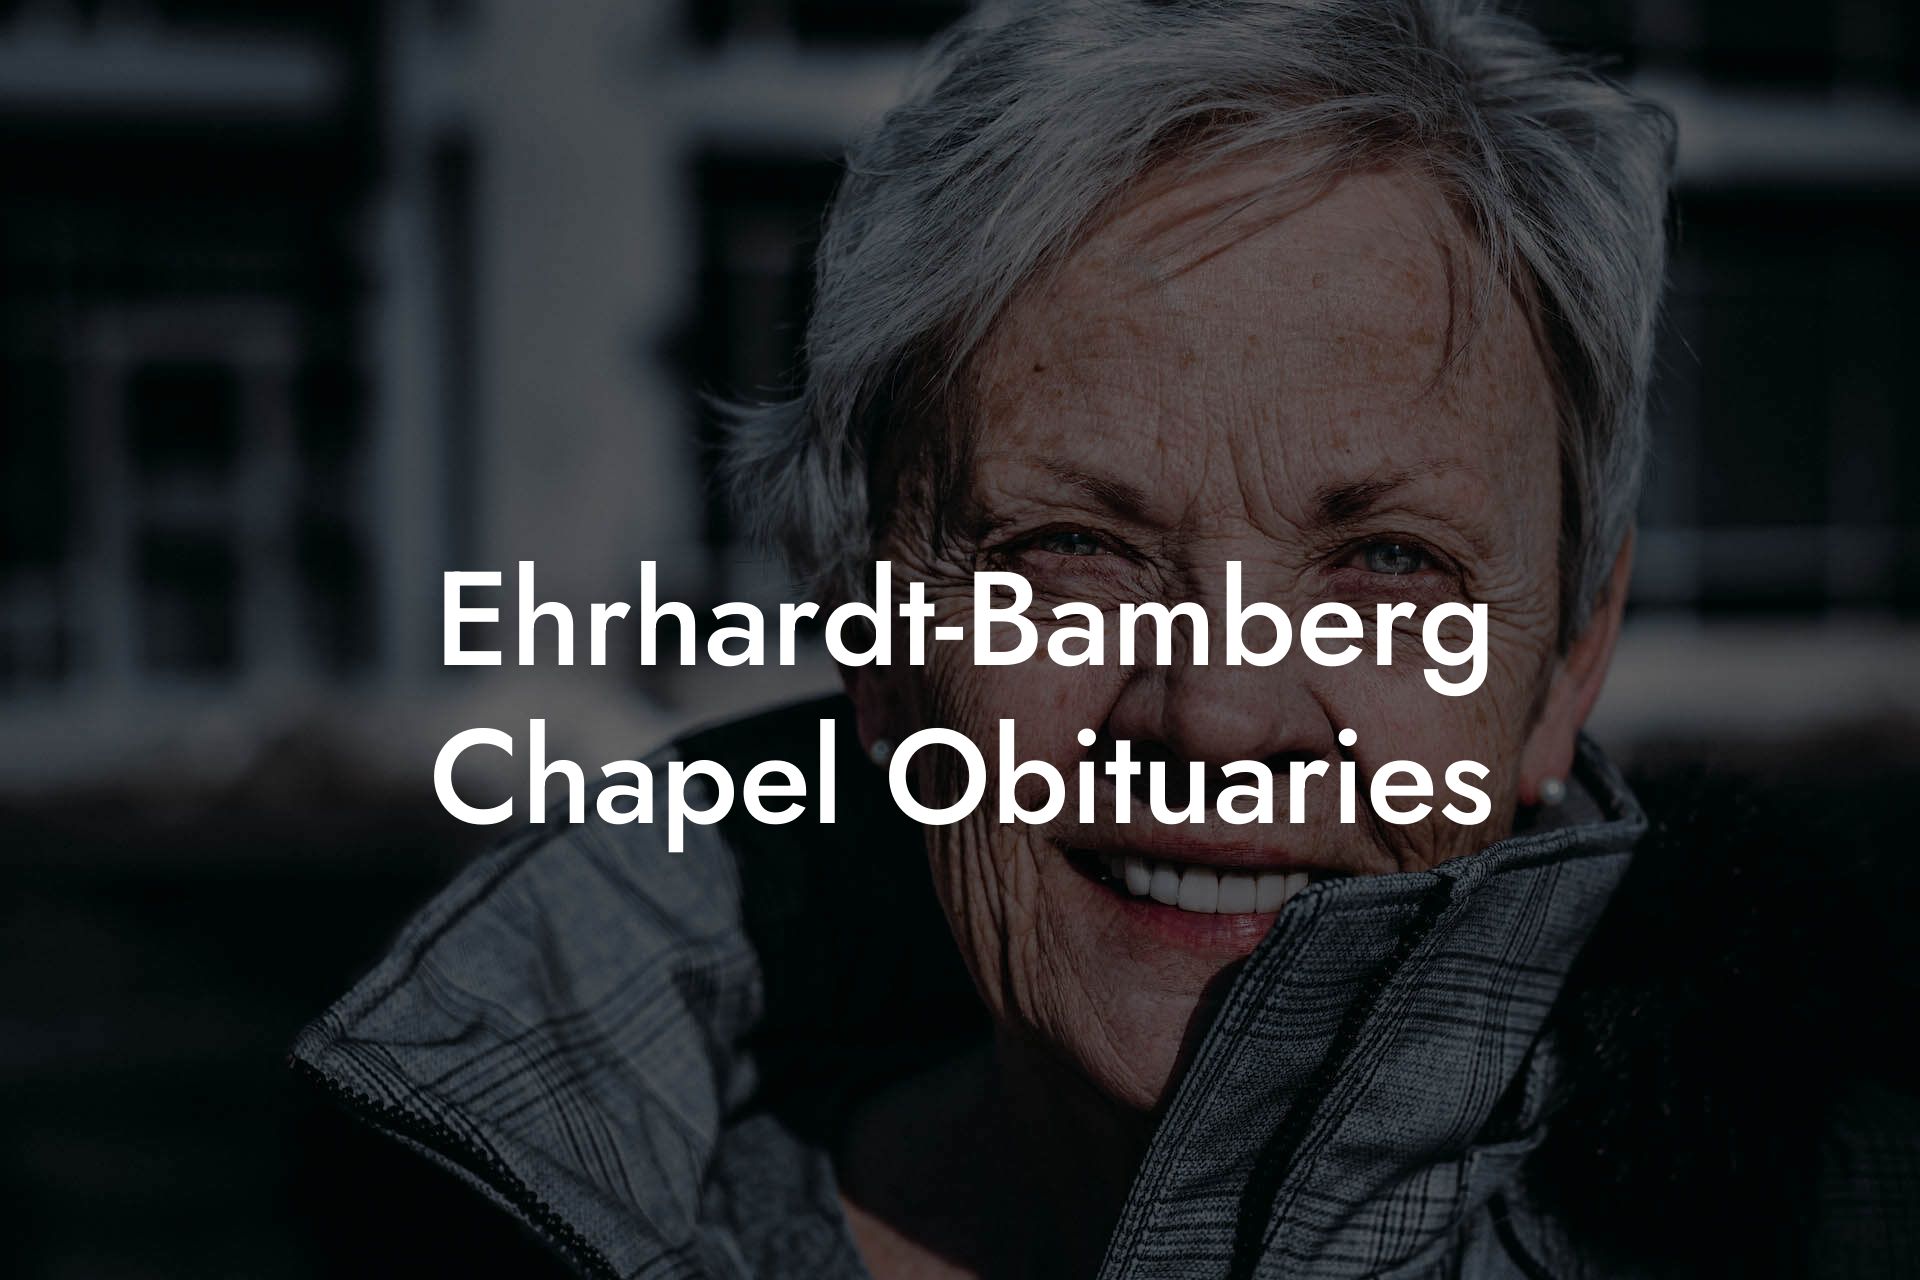 Ehrhardt-Bamberg Chapel Obituaries